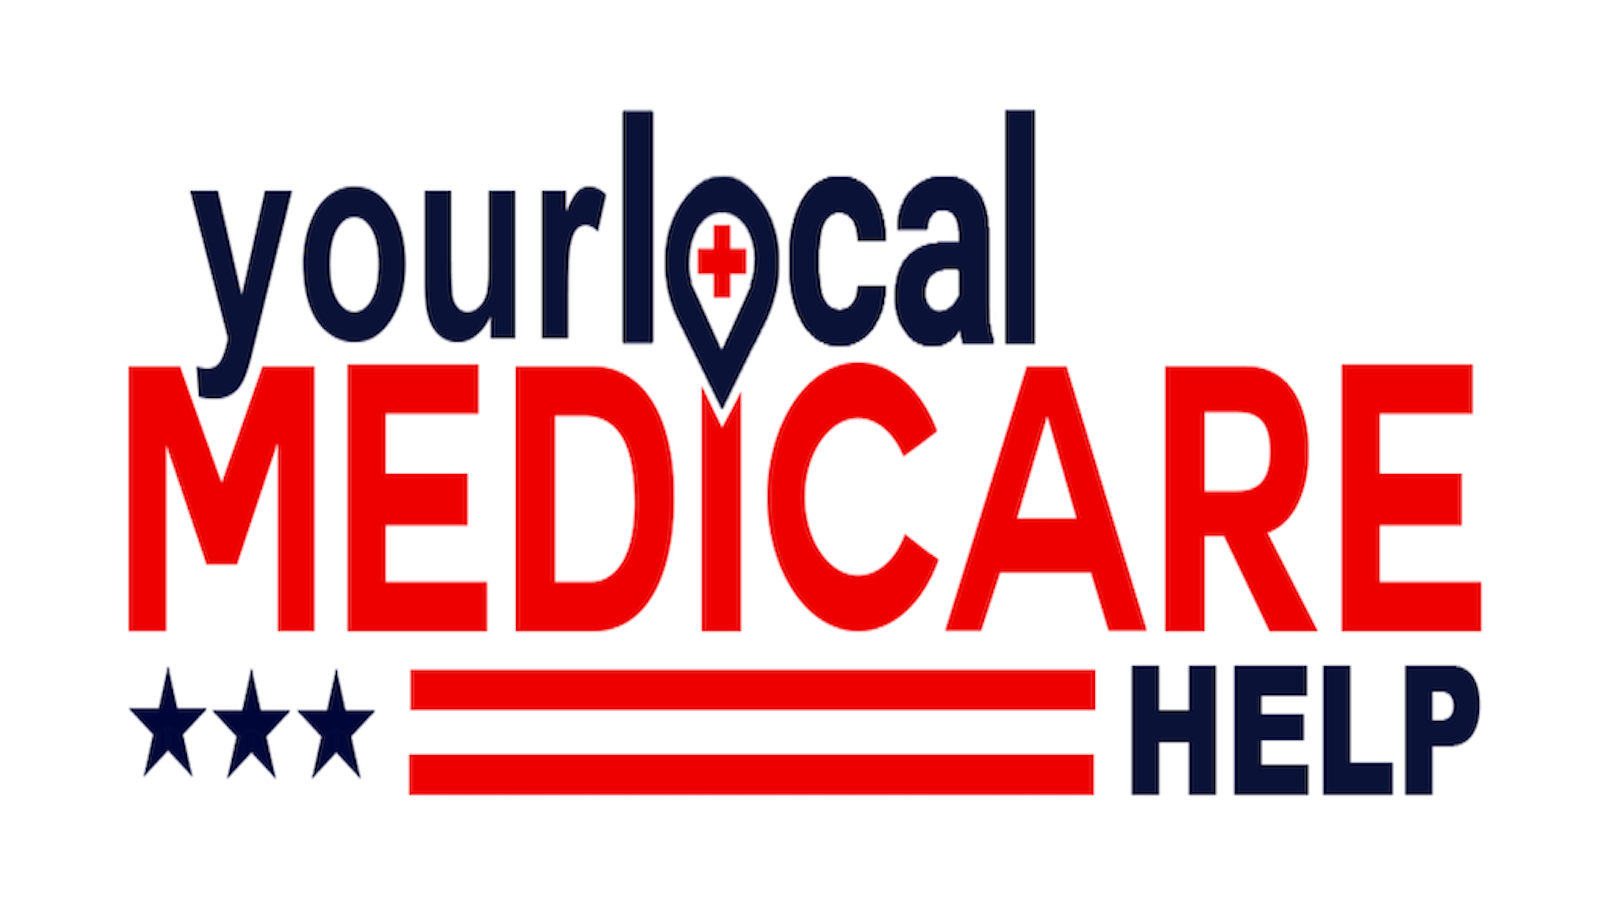 Your-Local-Medicare-Help-logo.jpg